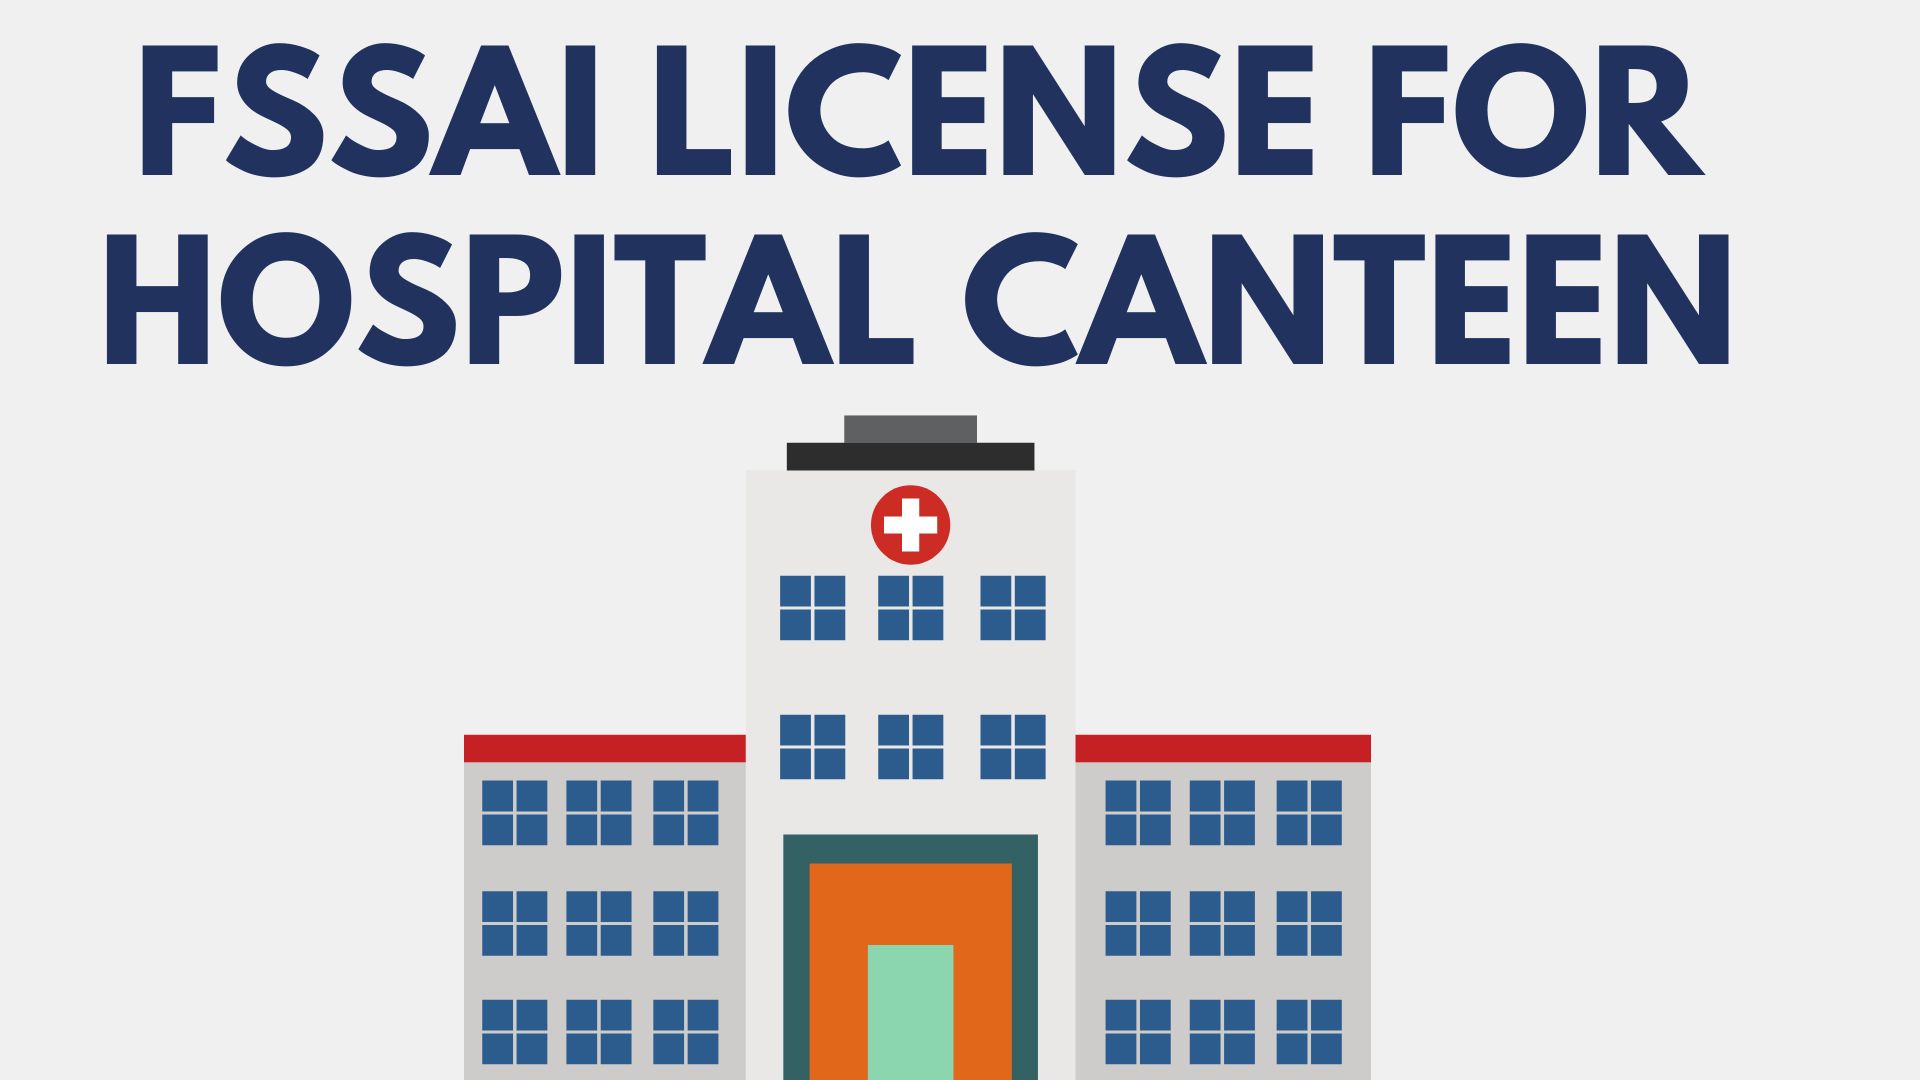 Fssai License for Hospital canteen